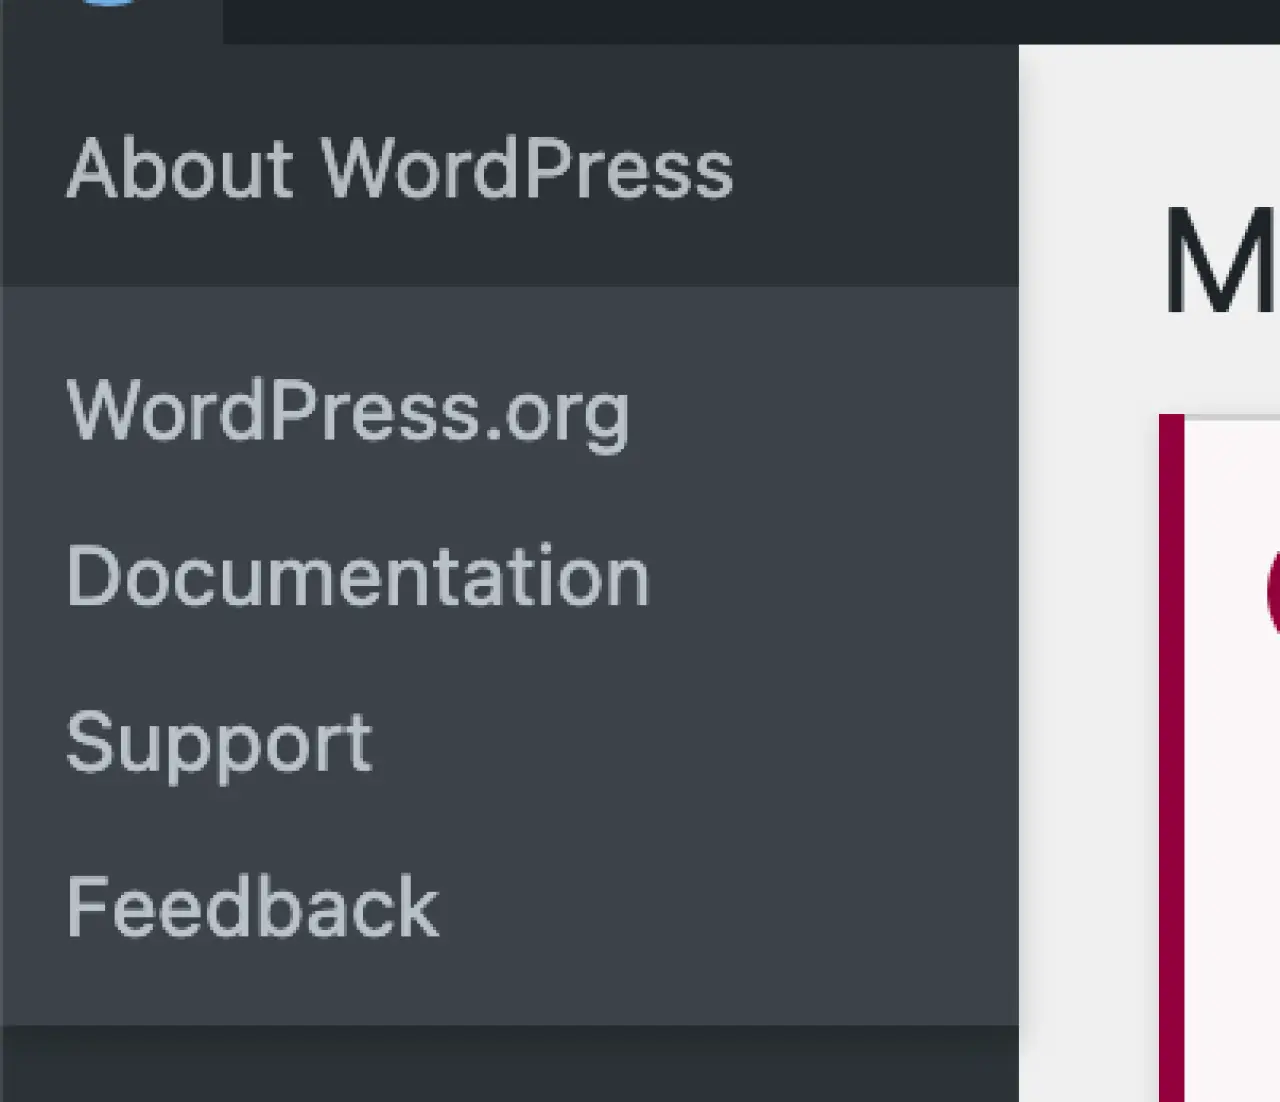 WordPress.org links in the admin bar